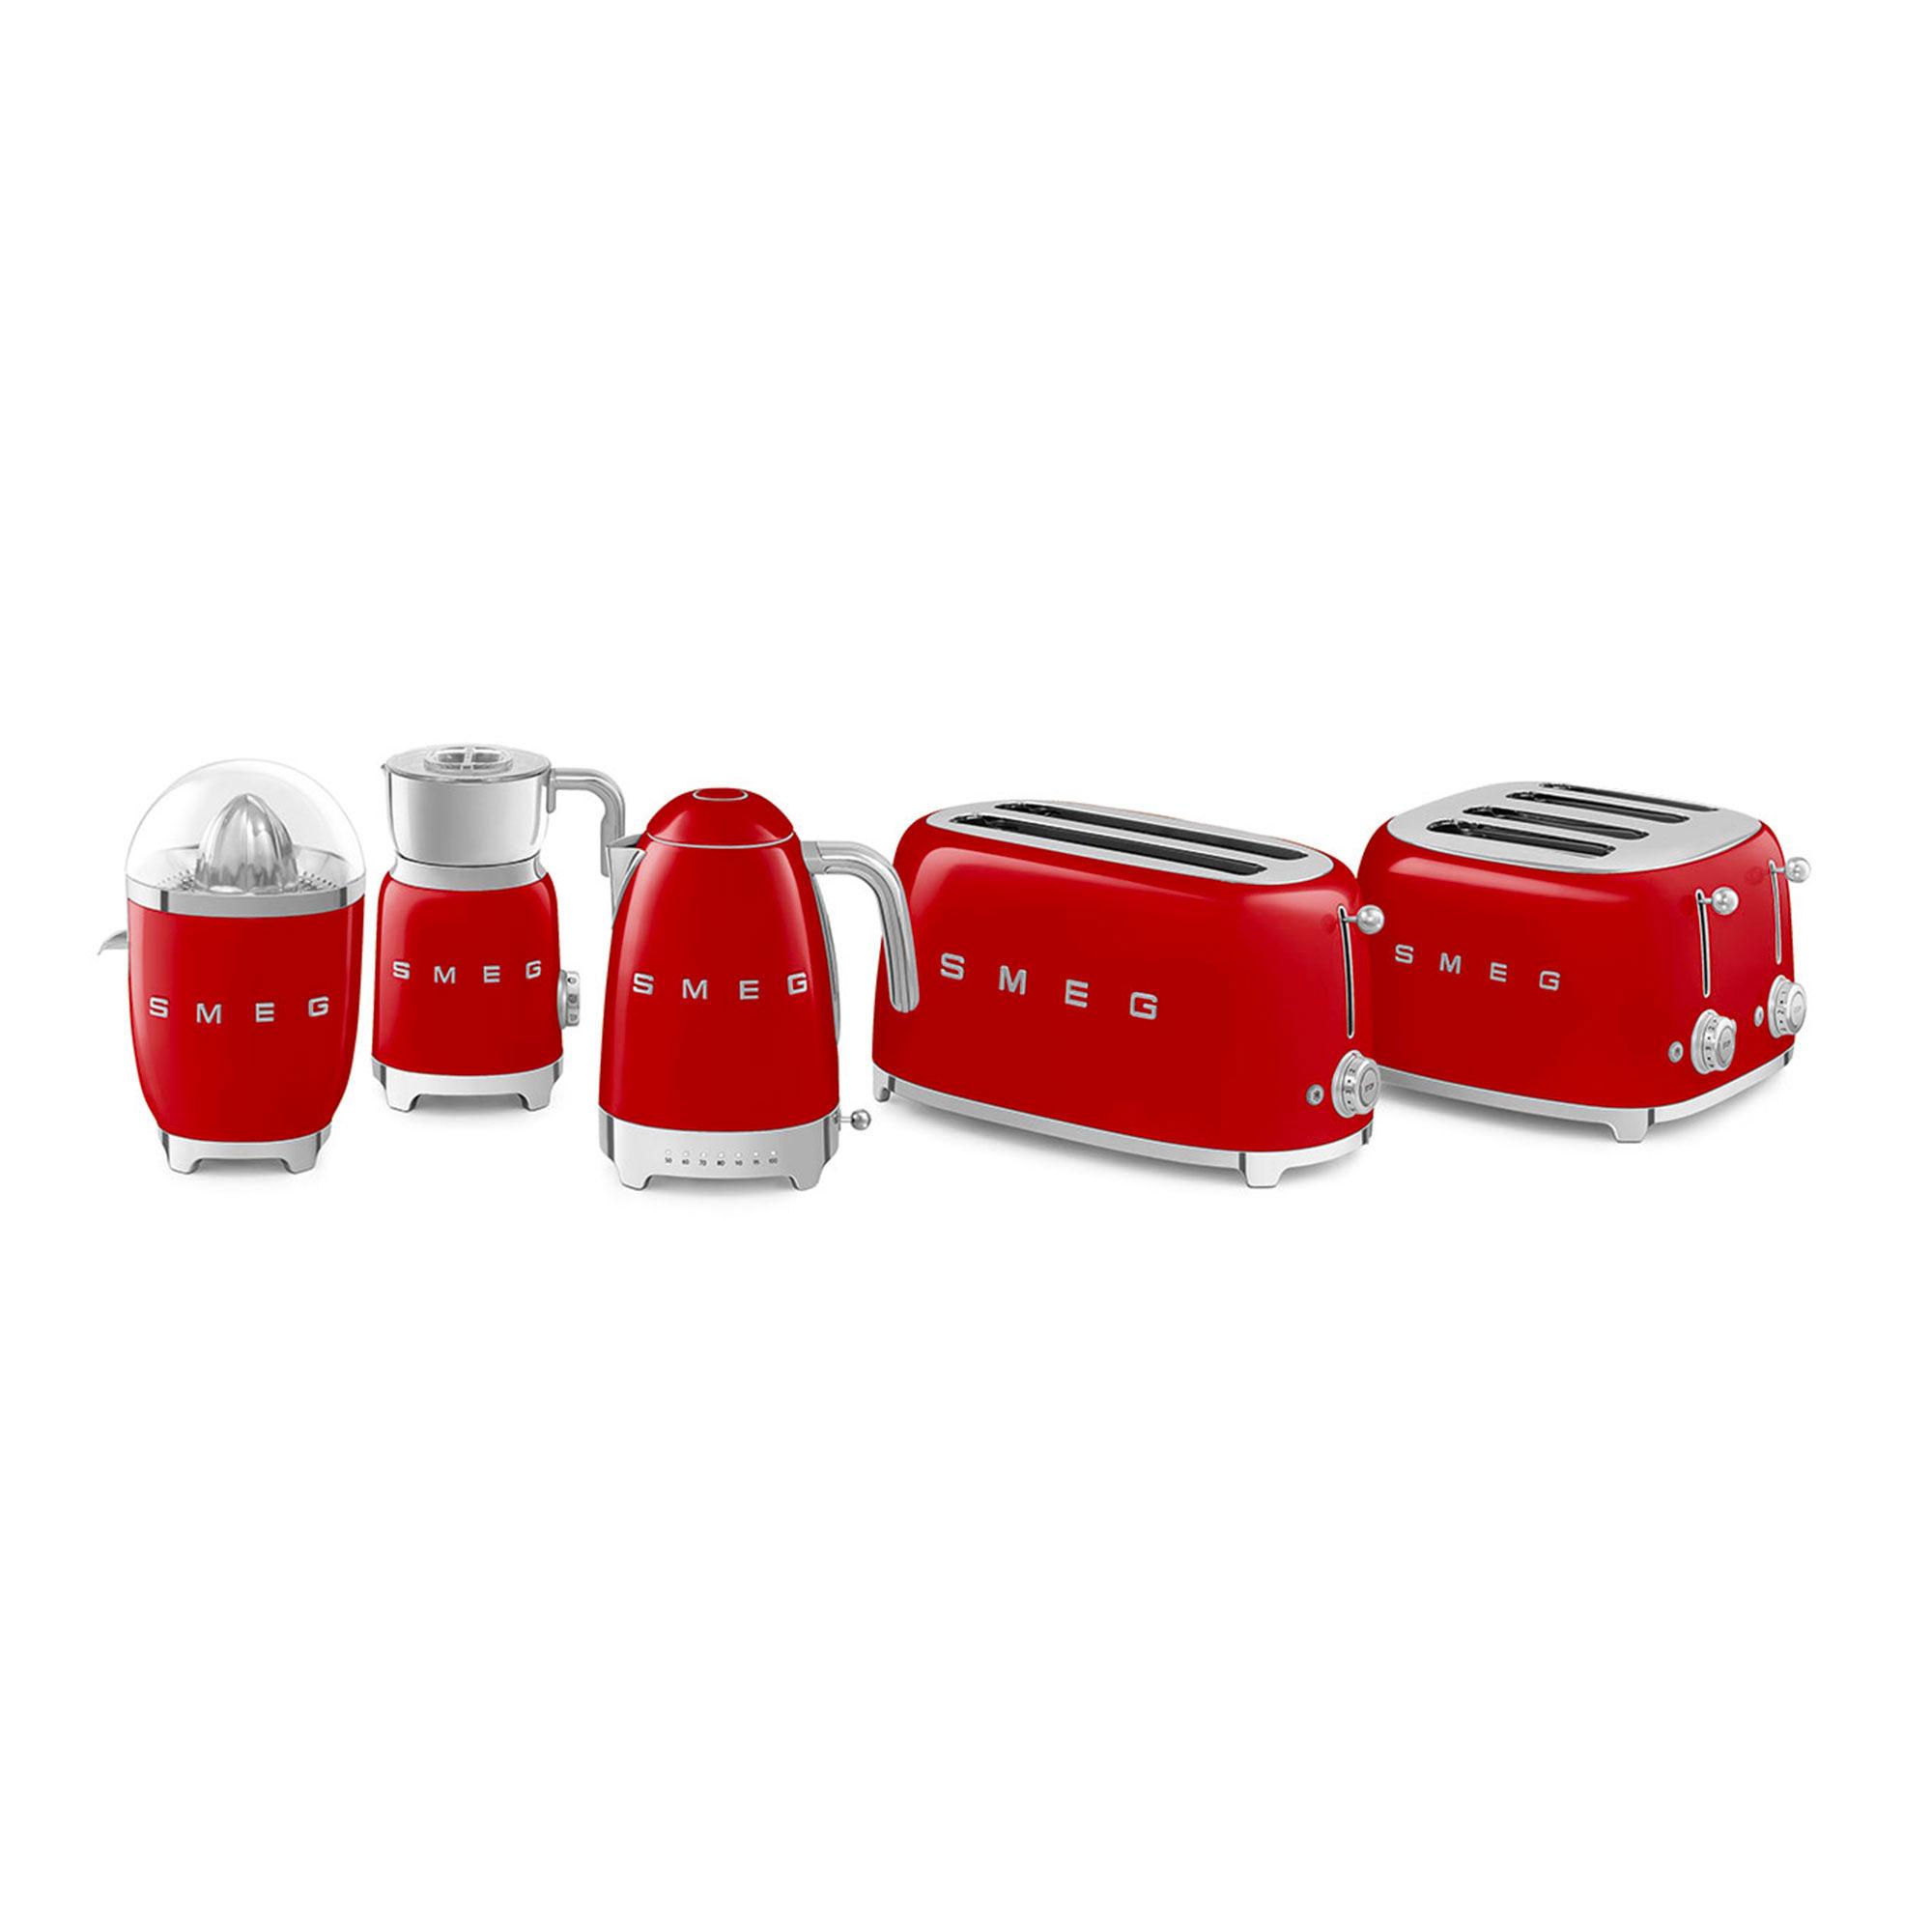 Smeg 50's Retro Style 4 Slot Toaster Red Image 6